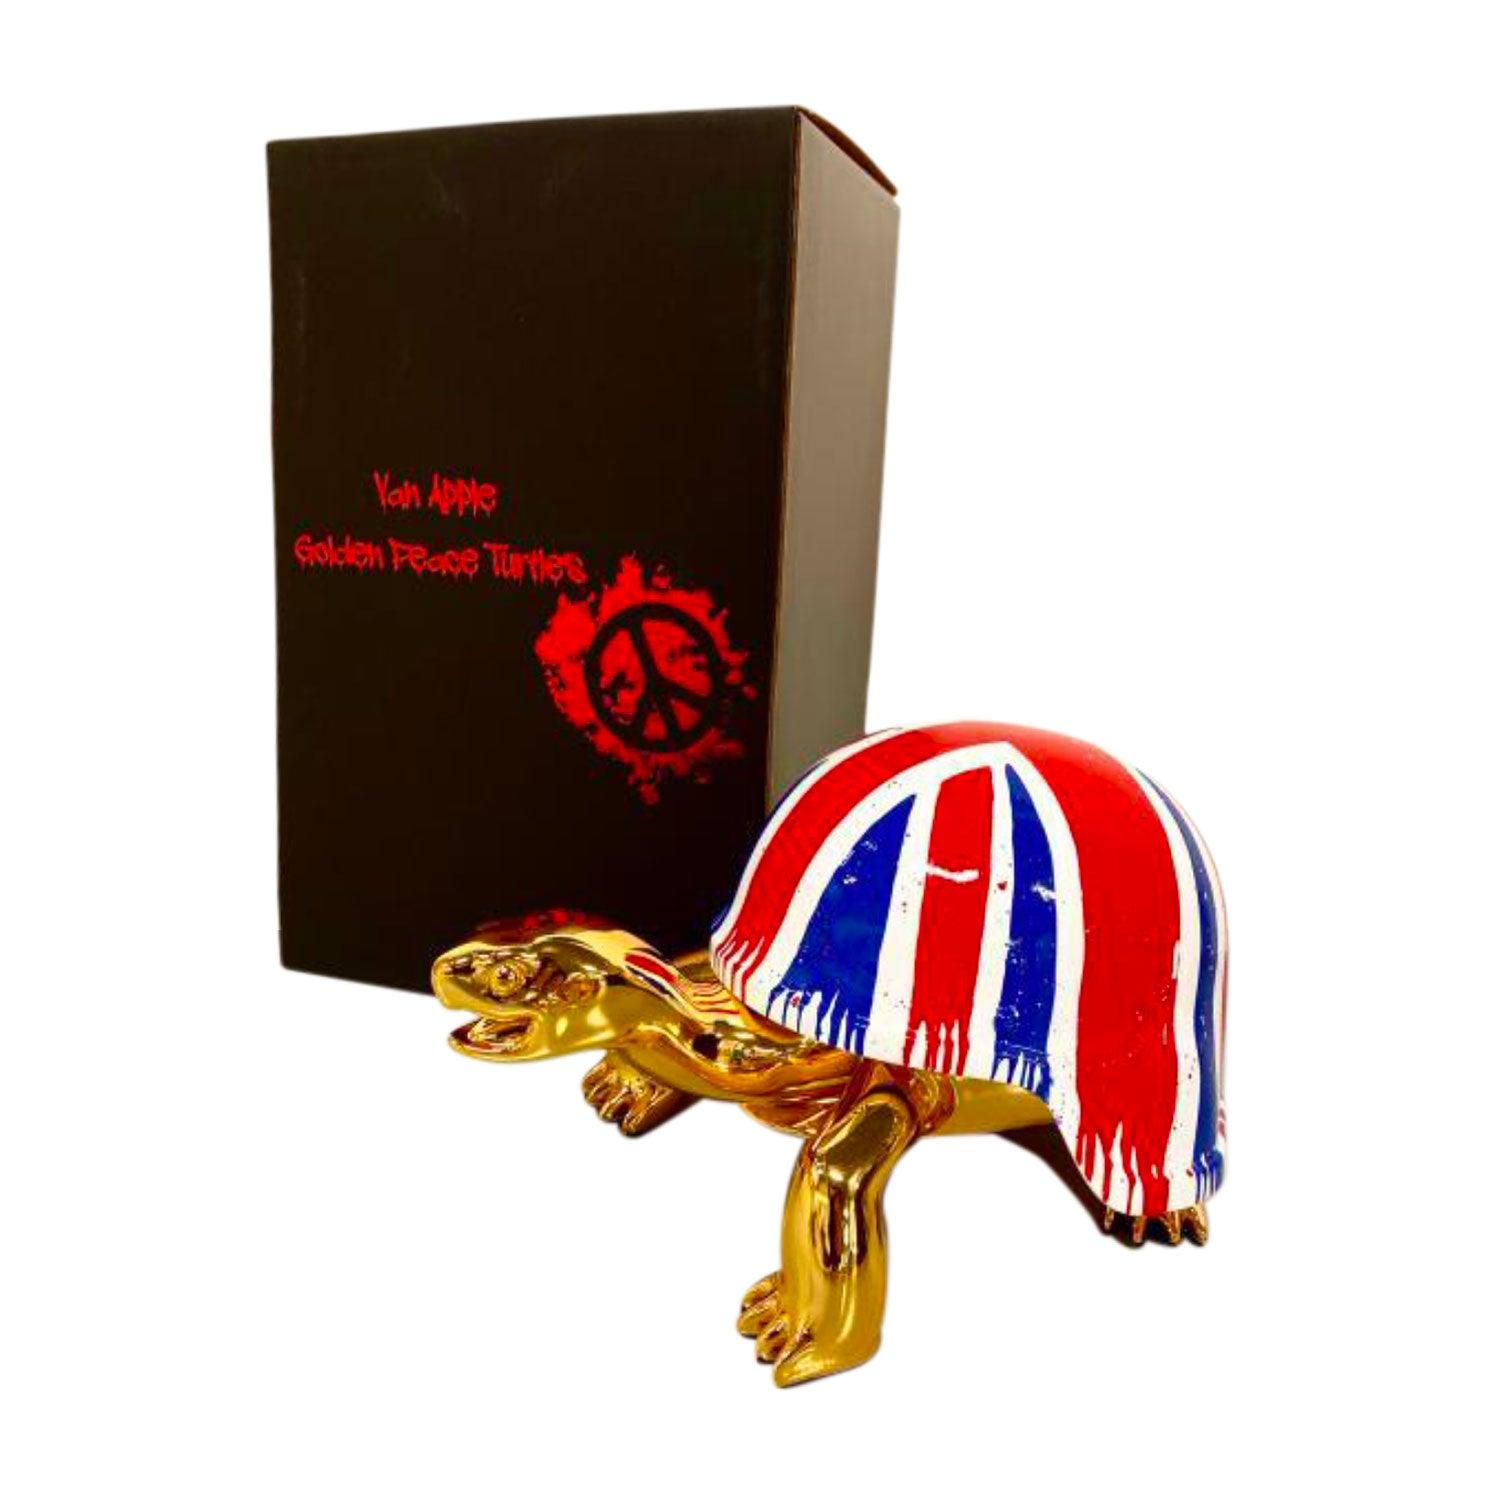 The Golden Peace Turtle We Love Union Jack - Moderne Kunst